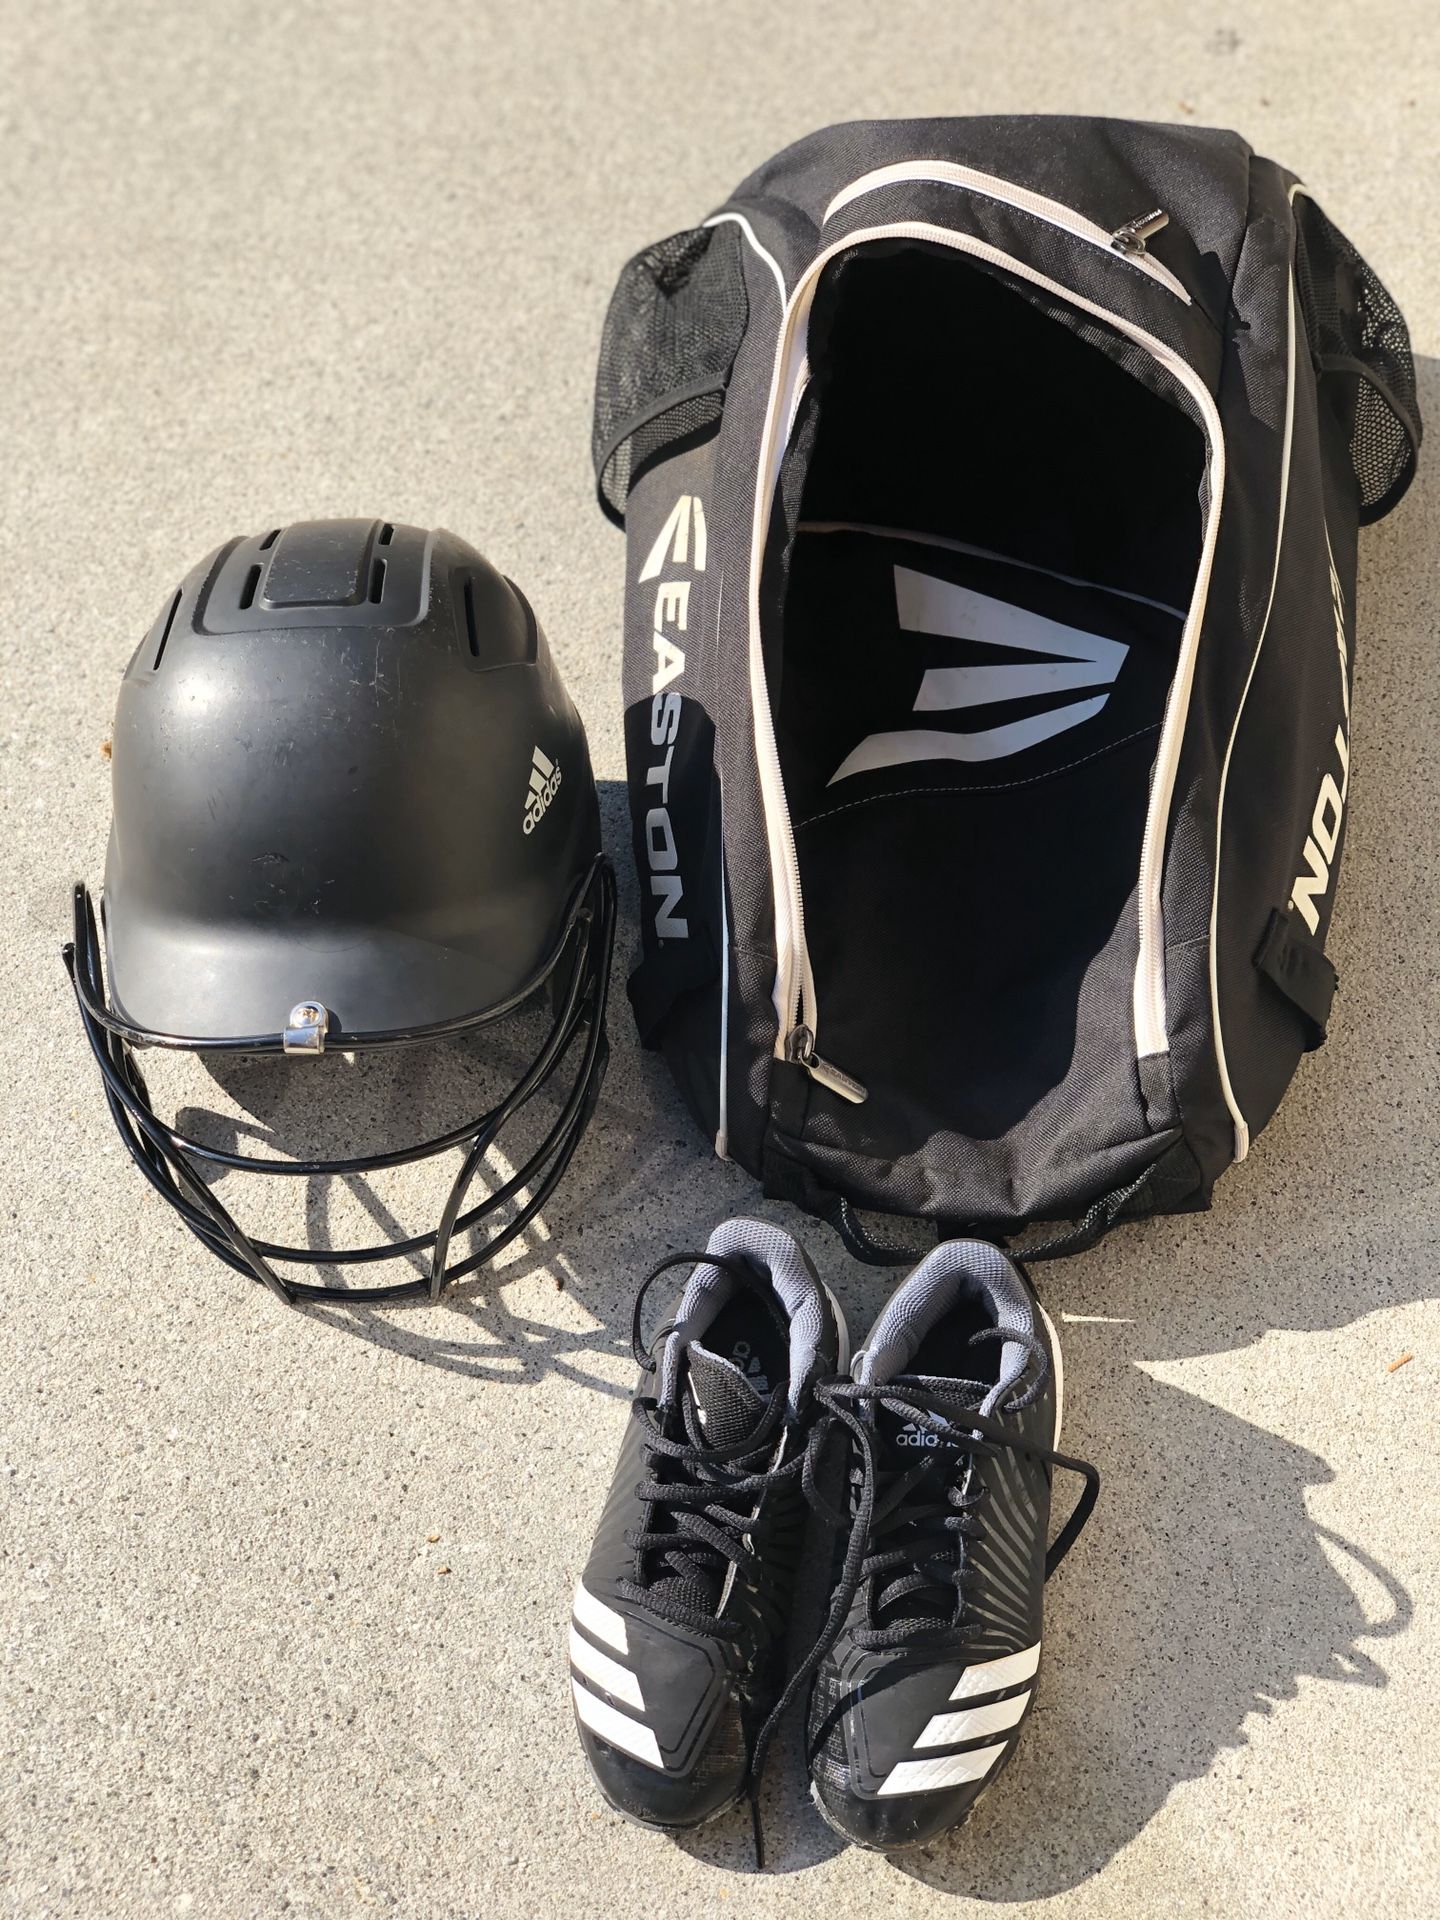 Kids baseball kit helmet baseball bat and shoes size 13 US